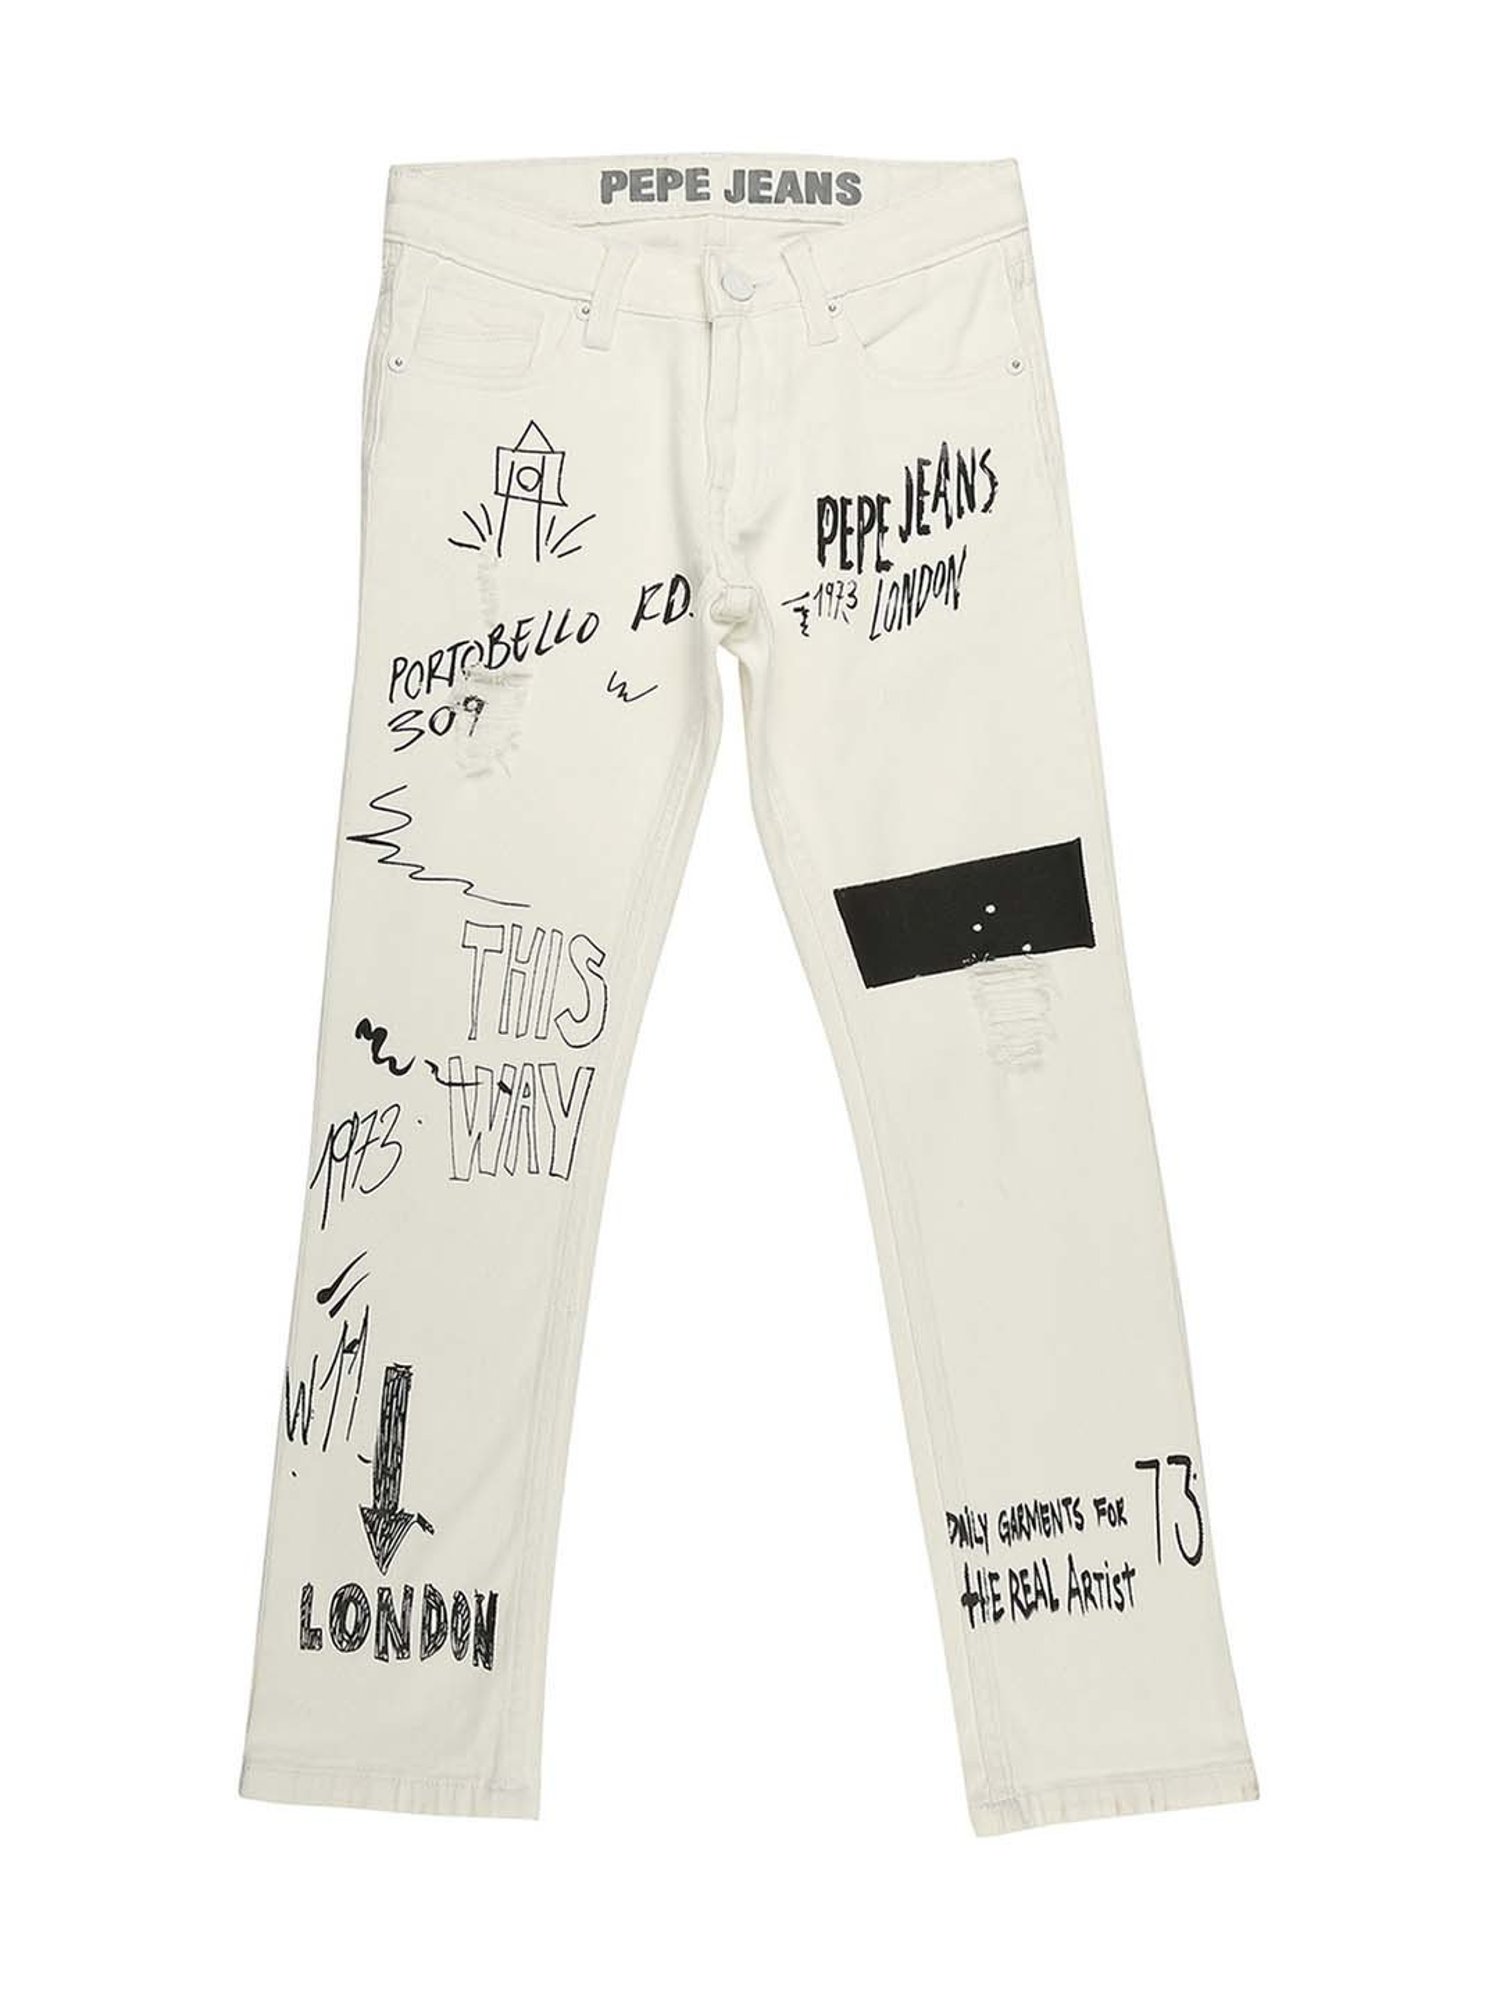 Pepe Jeans Pepe jeans Y2K patch denim pants | Grailed